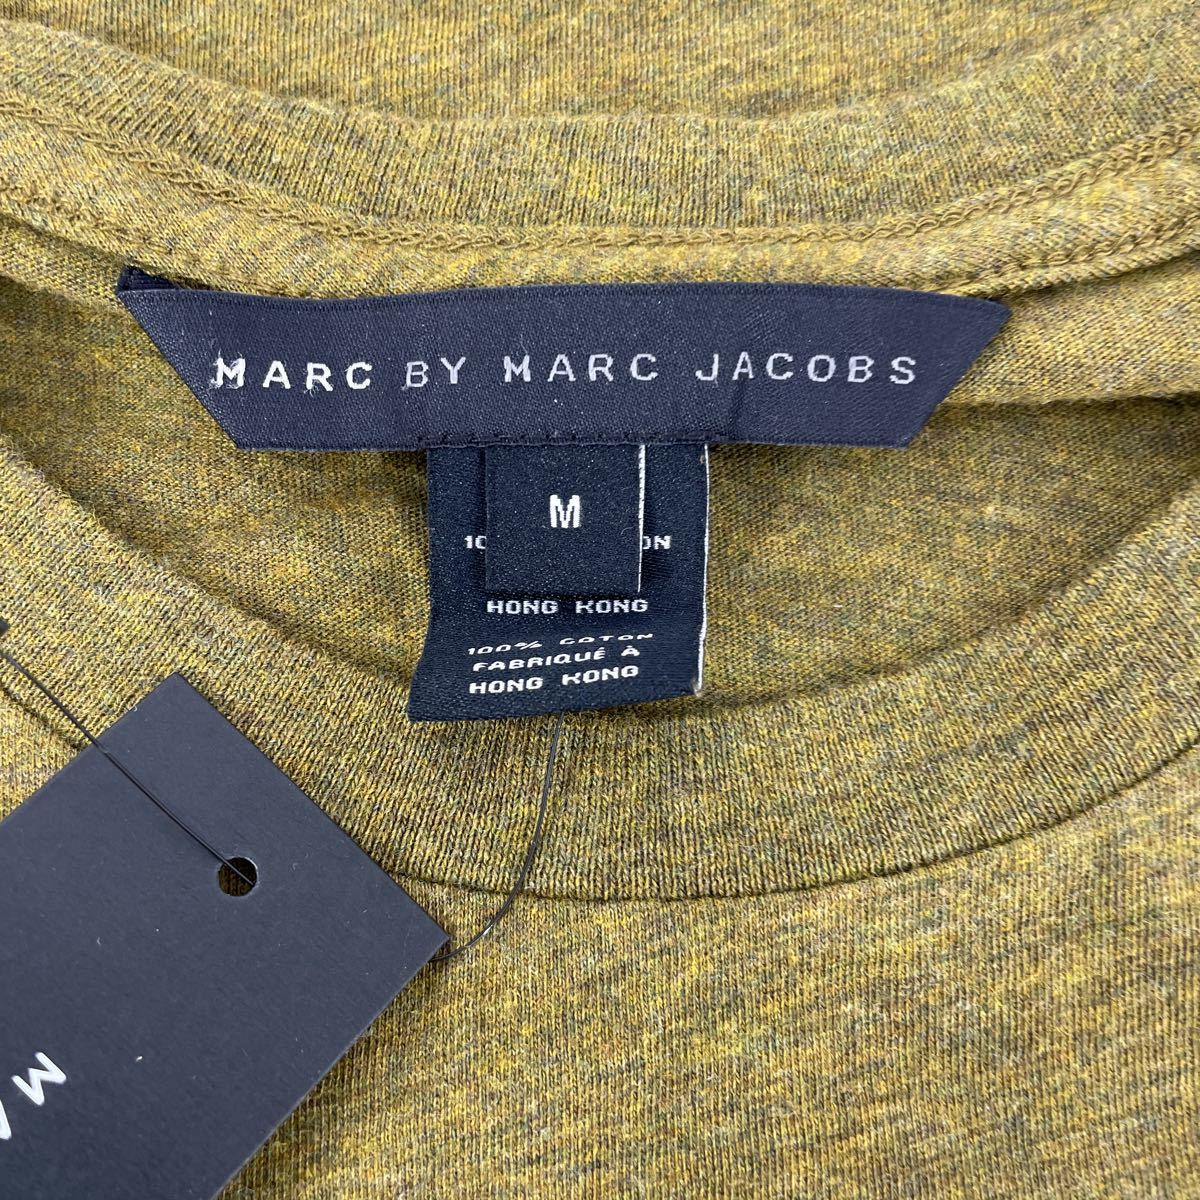 Marc by Marc Jacobs/ Mark Jacobs хлопок 100% футболка ARMY MELANGE/M M4001580/ справка розничная цена \\10,450